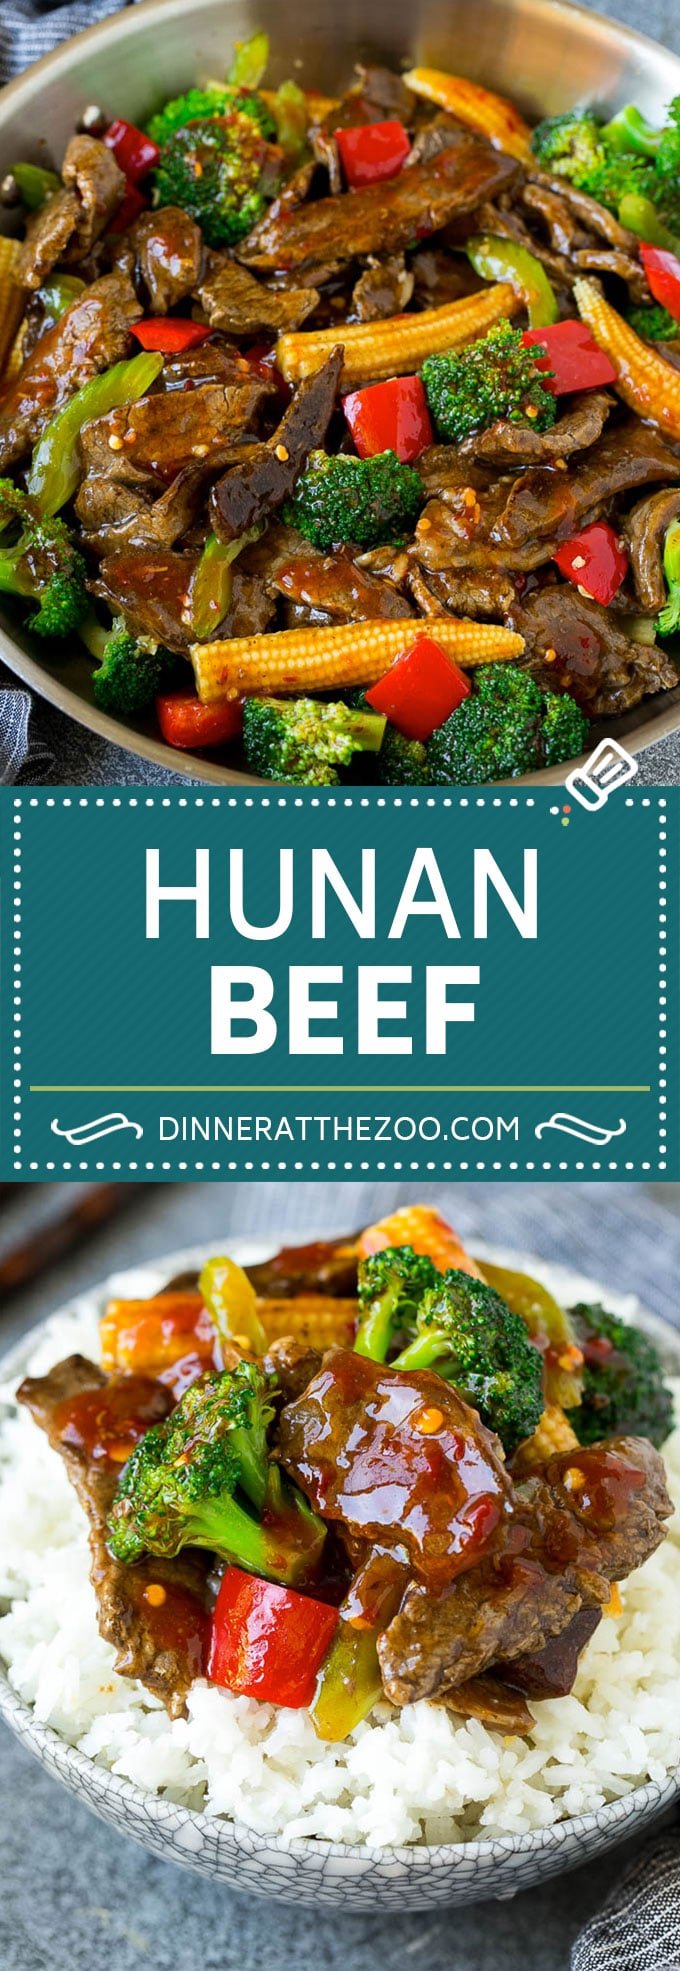 Hunan Beef Recipe | Beef Stir Fry #beef #stirfry #dinner #broccoli #dinneratthezoo